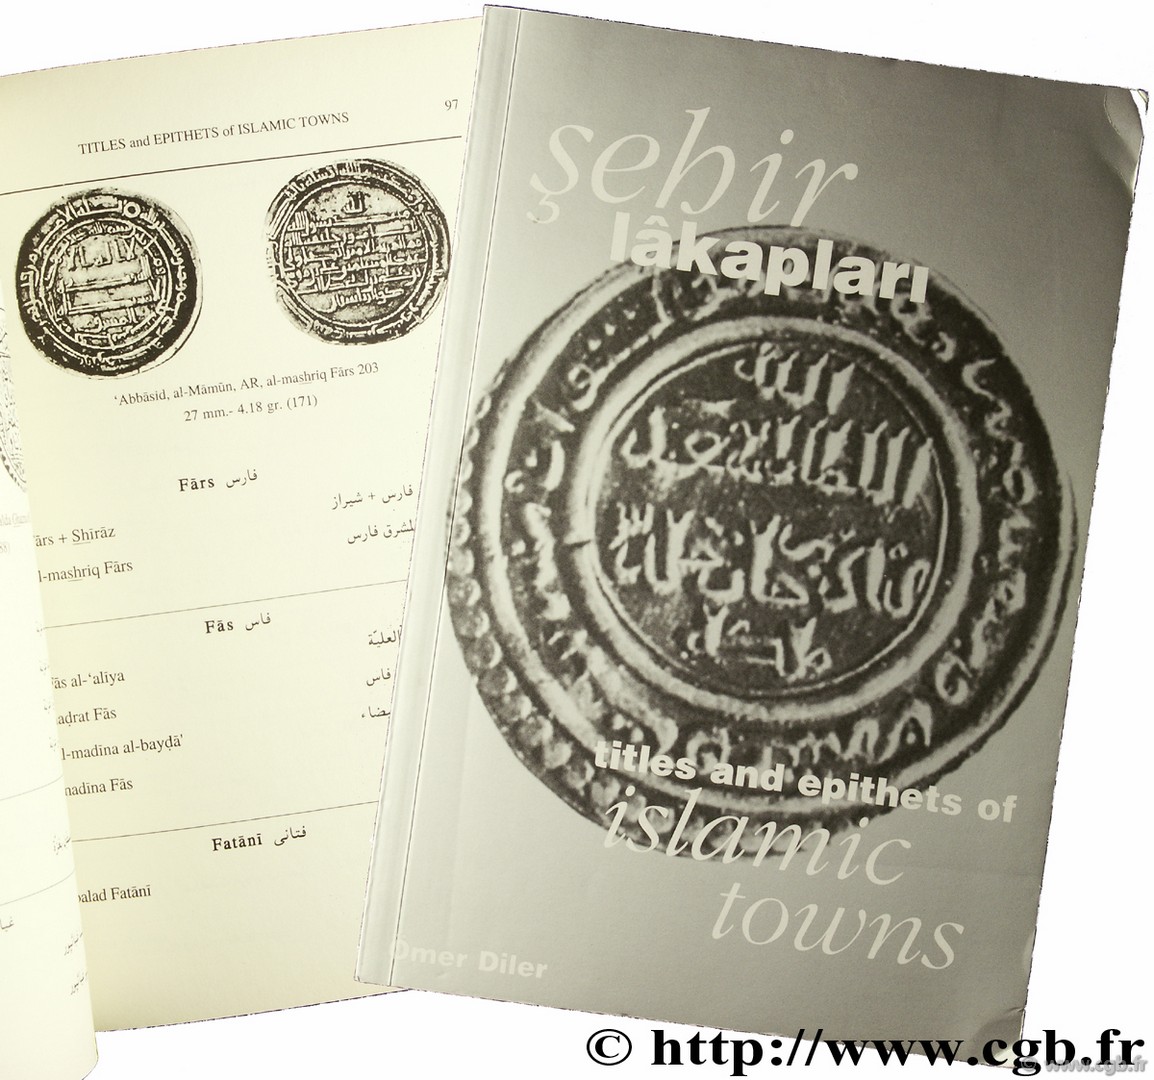 Titles and Epithets of Islamic Towns LÂKAPLARI S.